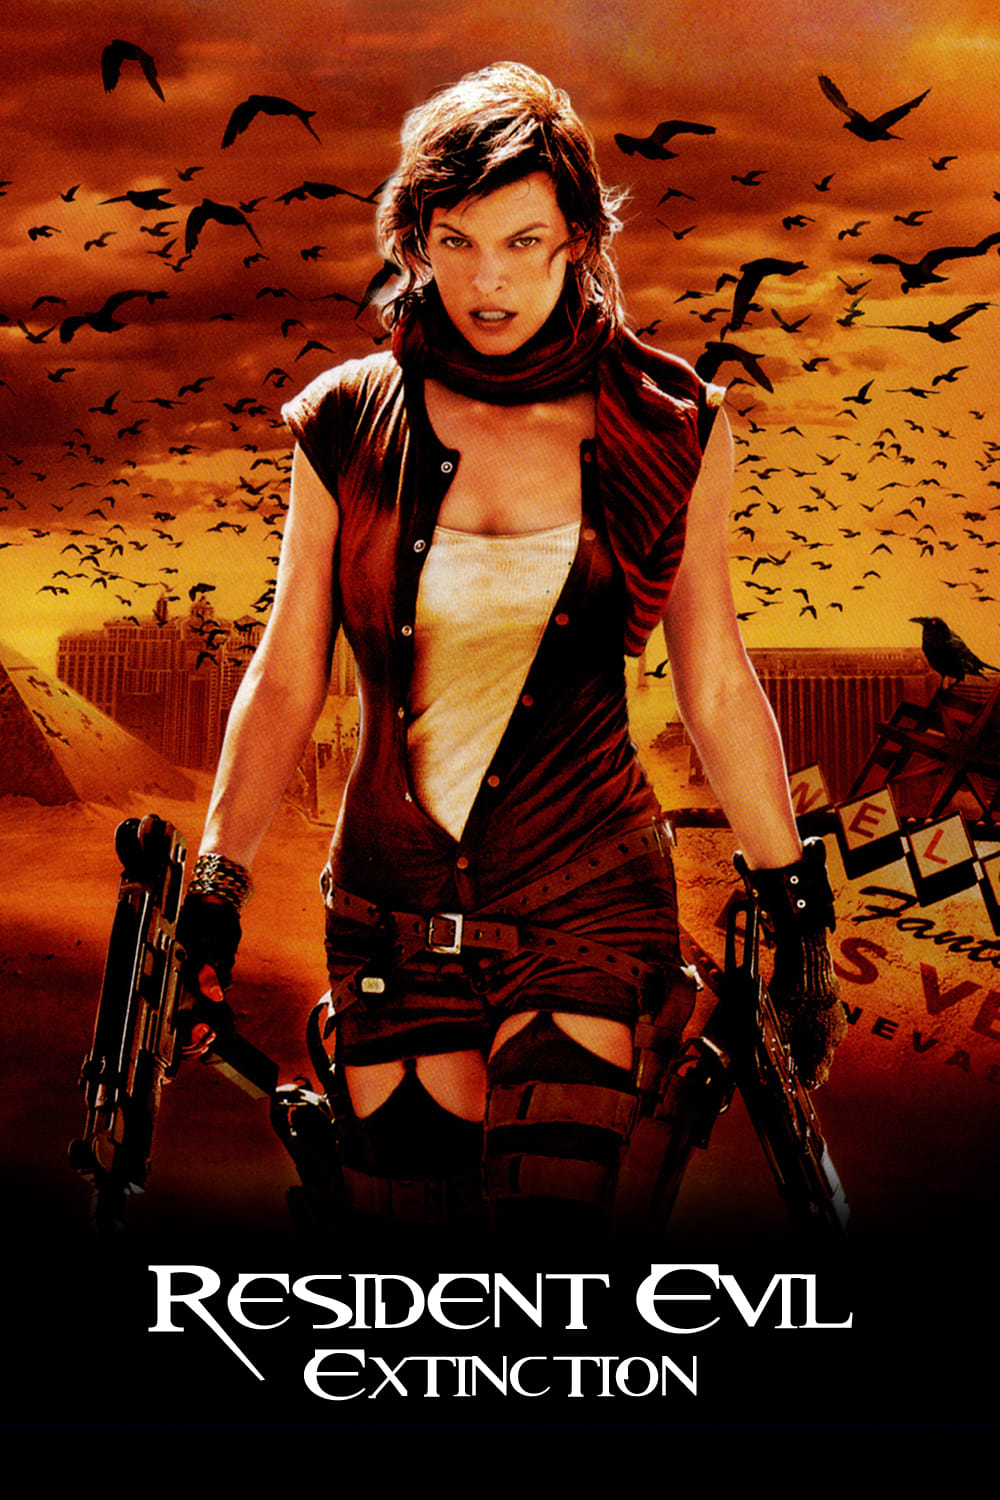 Resident evil 3: extinction 2007 4K kvalitāte